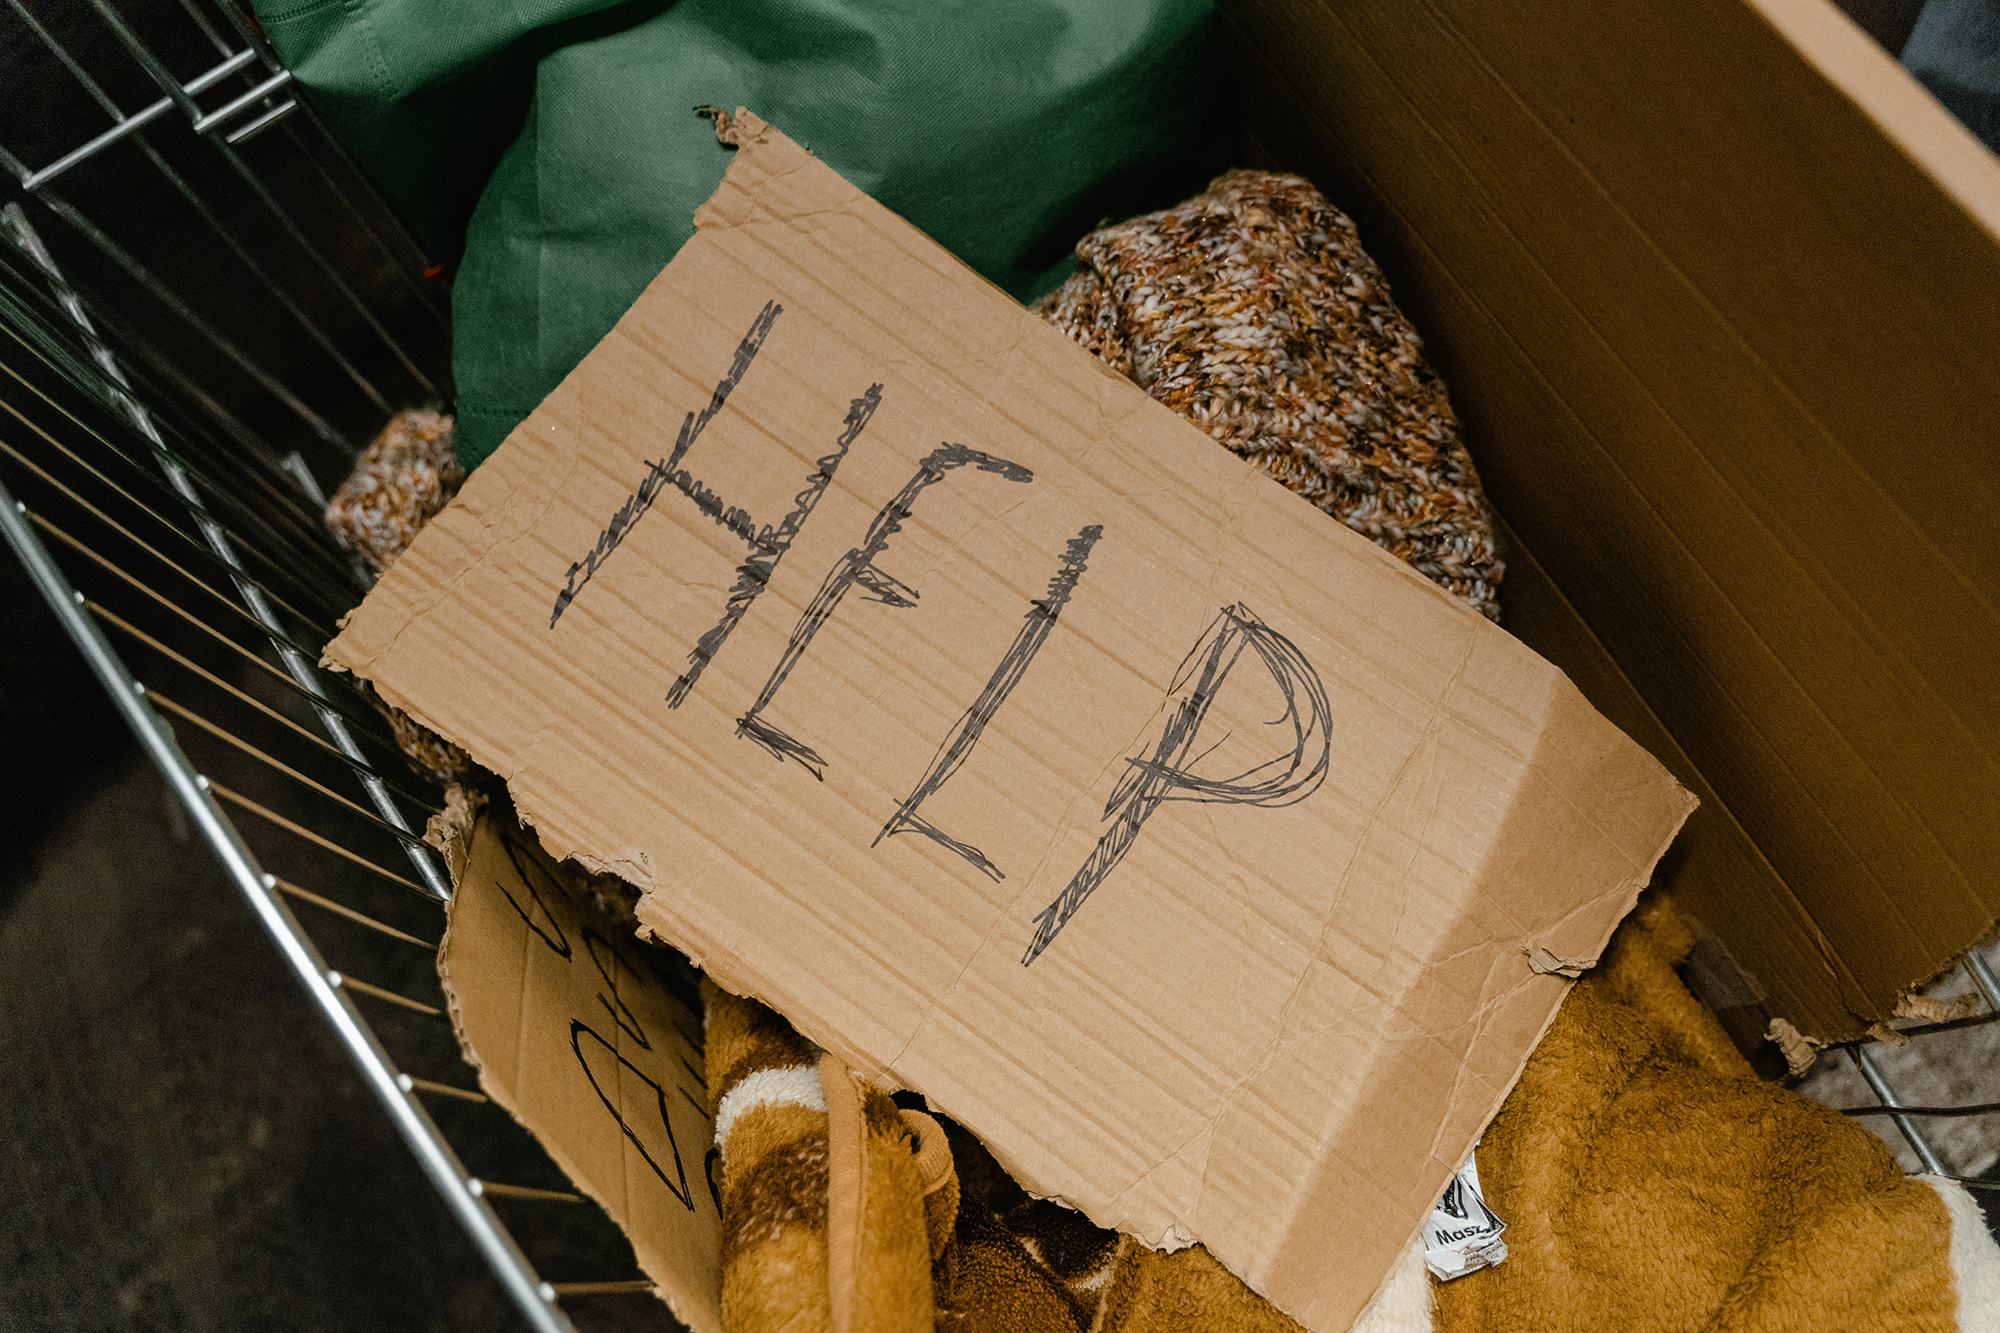 Cardboard sign reading "help" sitting on top of basket